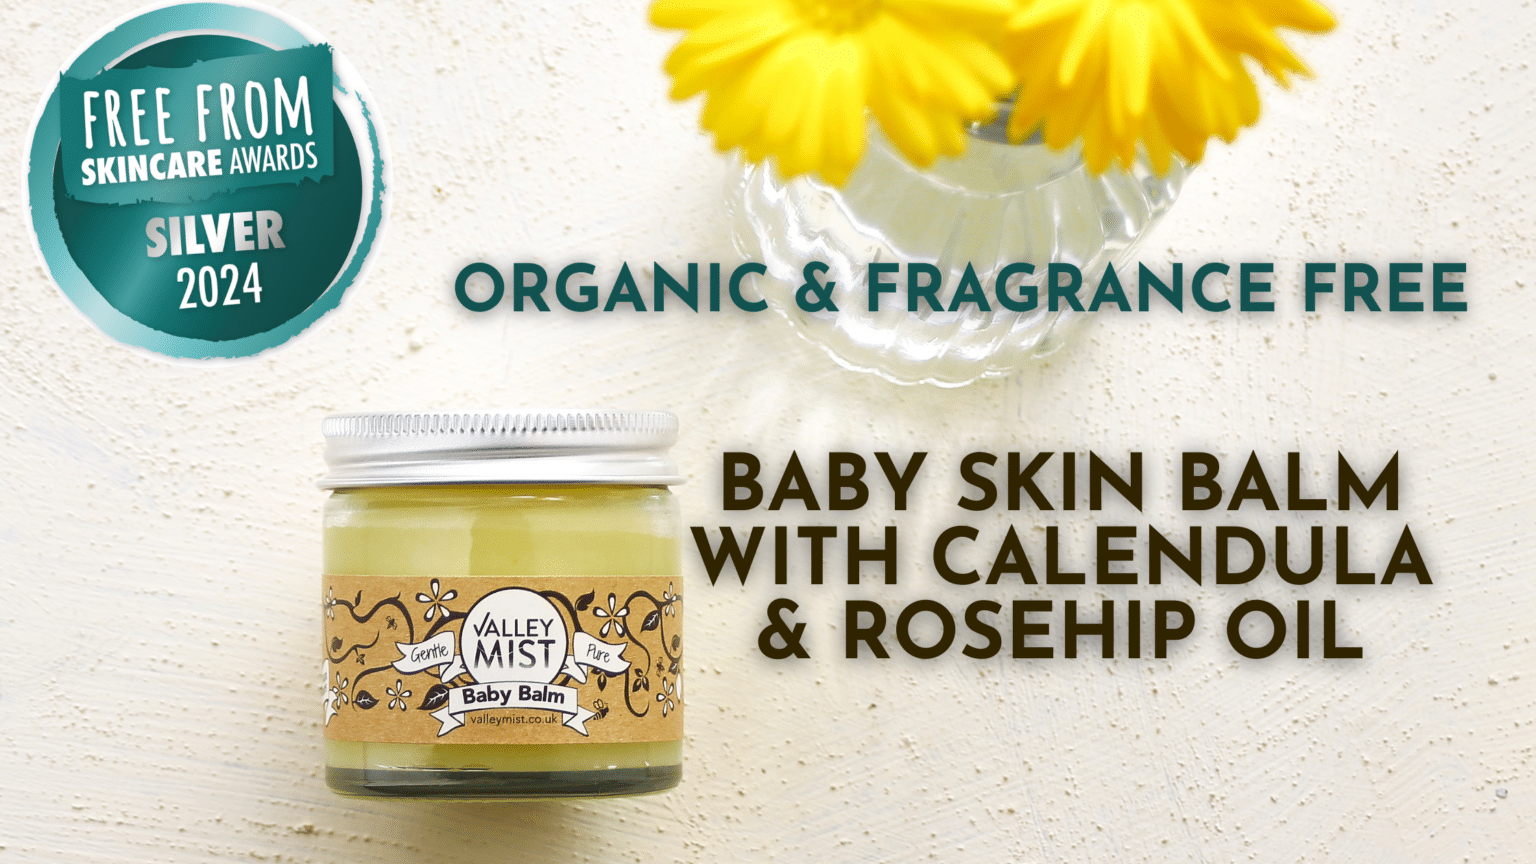 Baby Skin Balm With Calendula & Rosehip Oil banner3